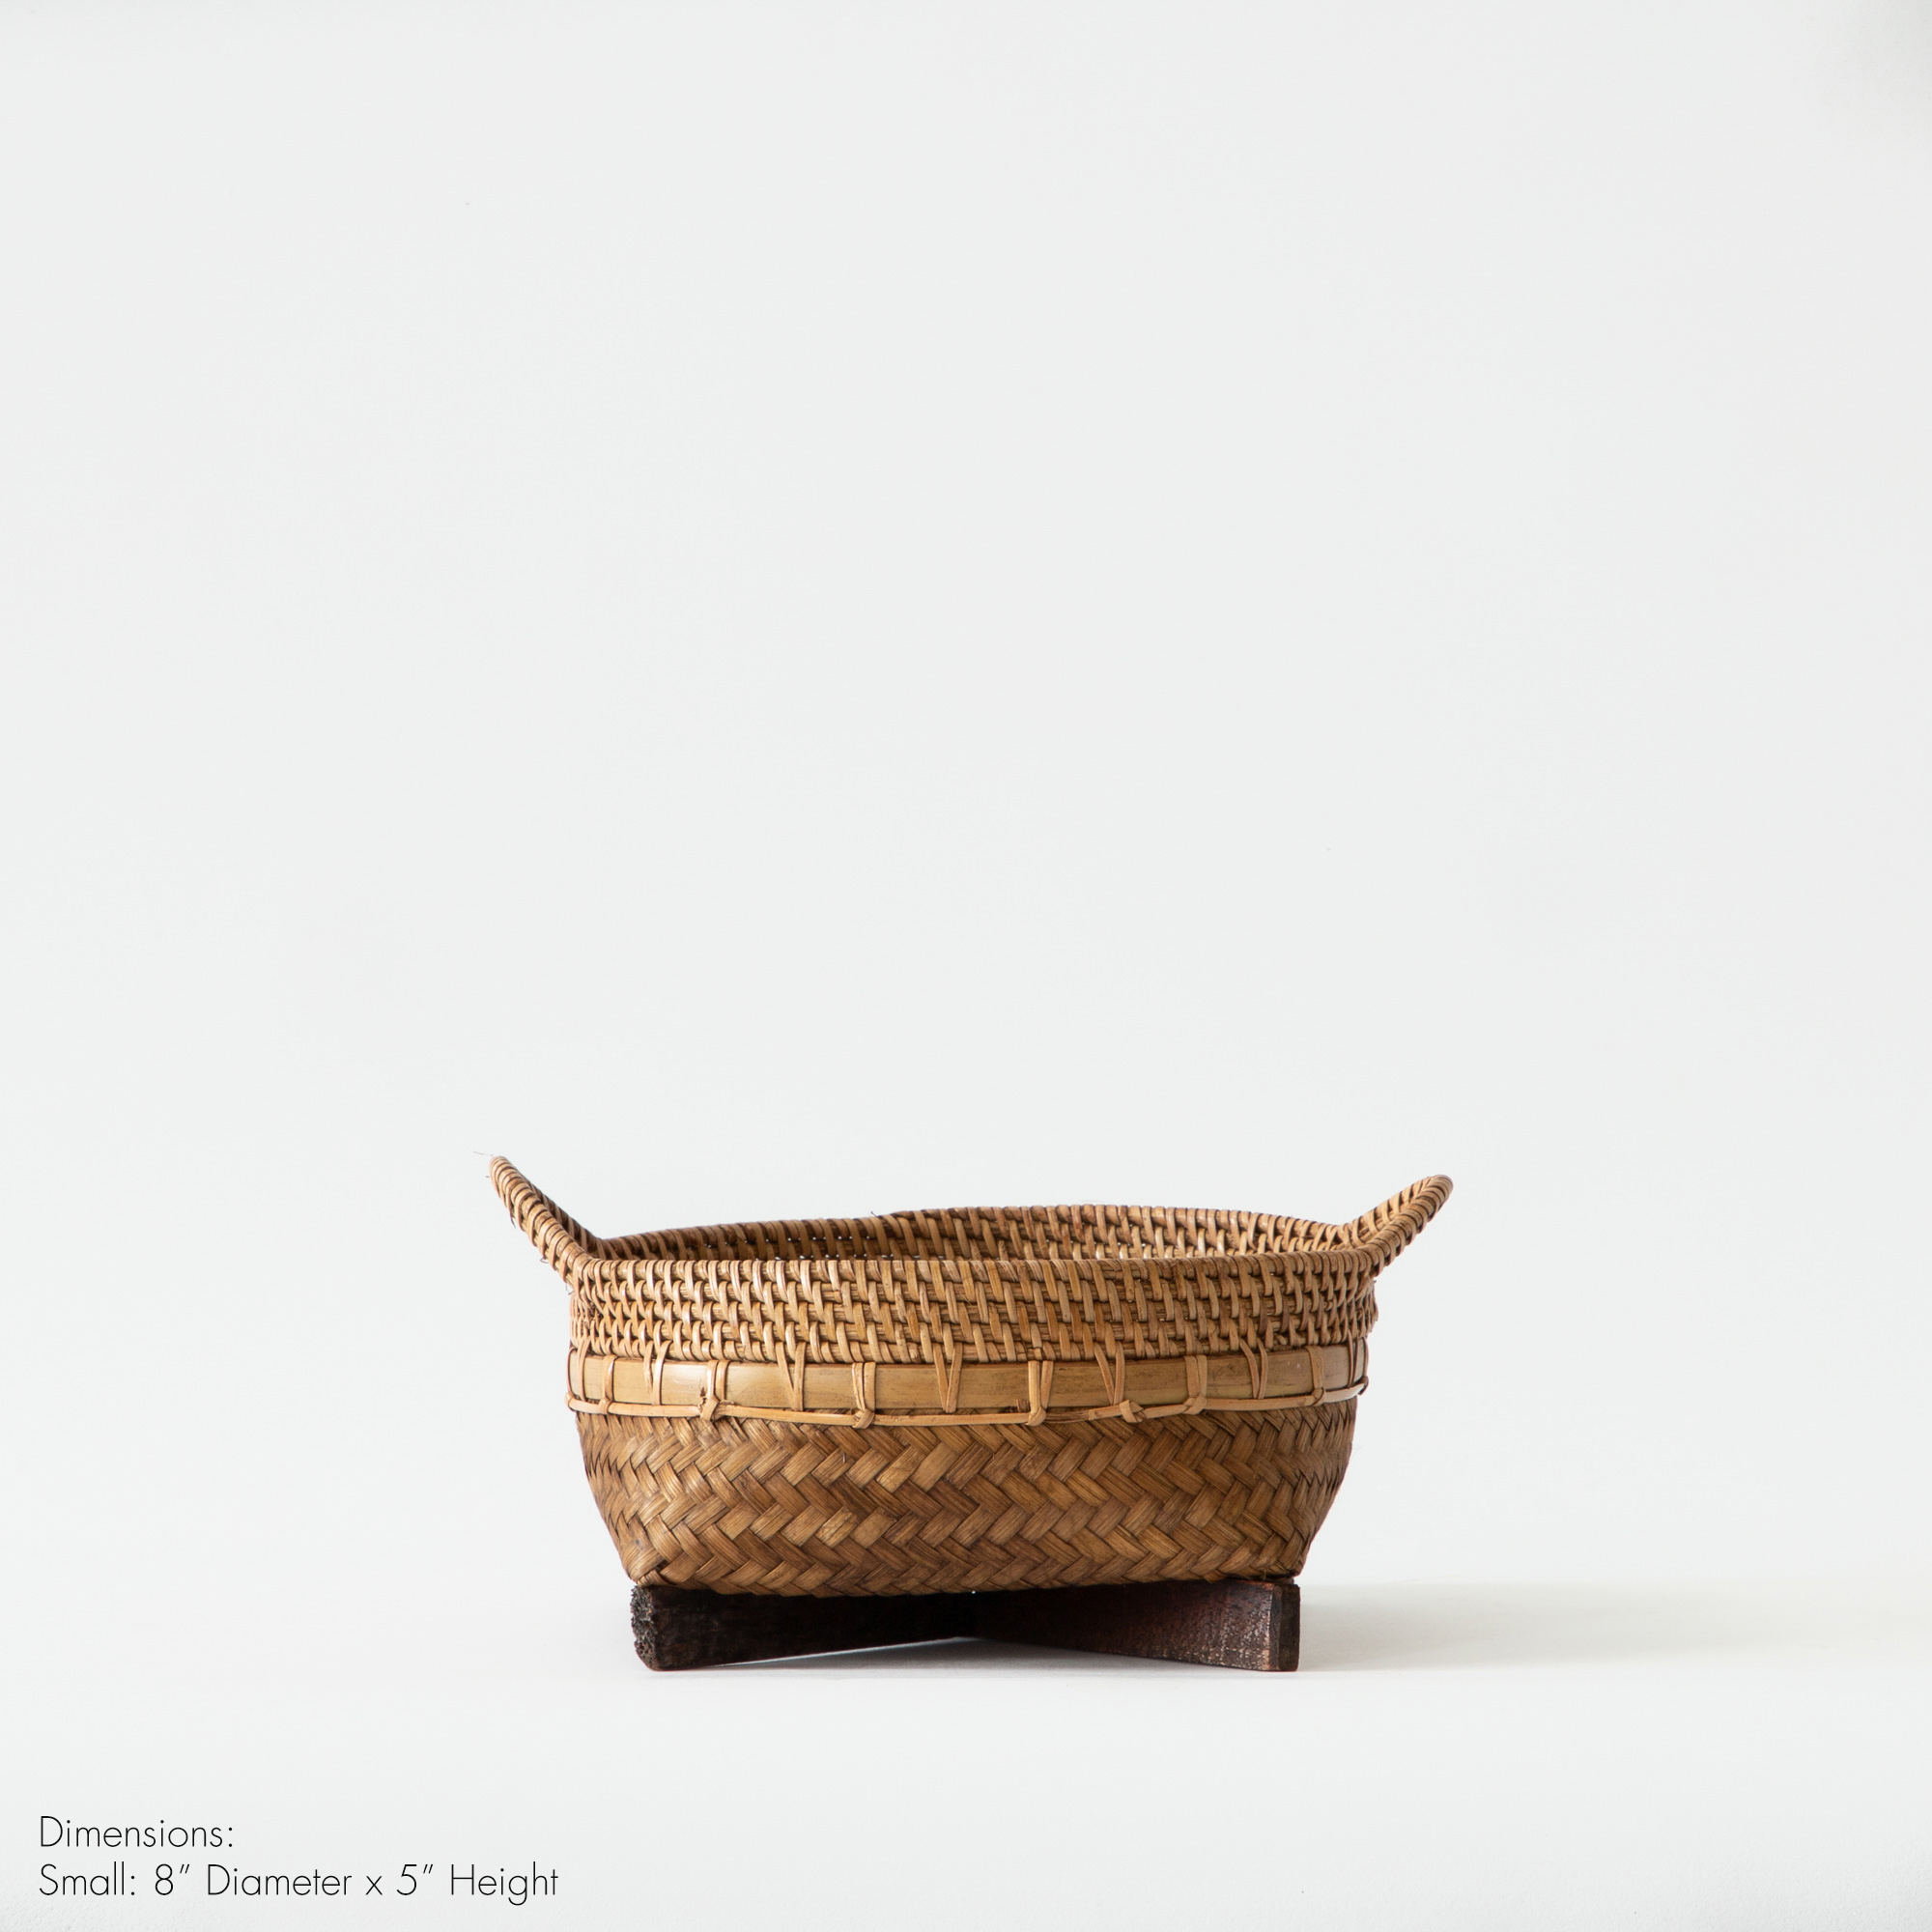 Art of Borneo - Fruit Basket